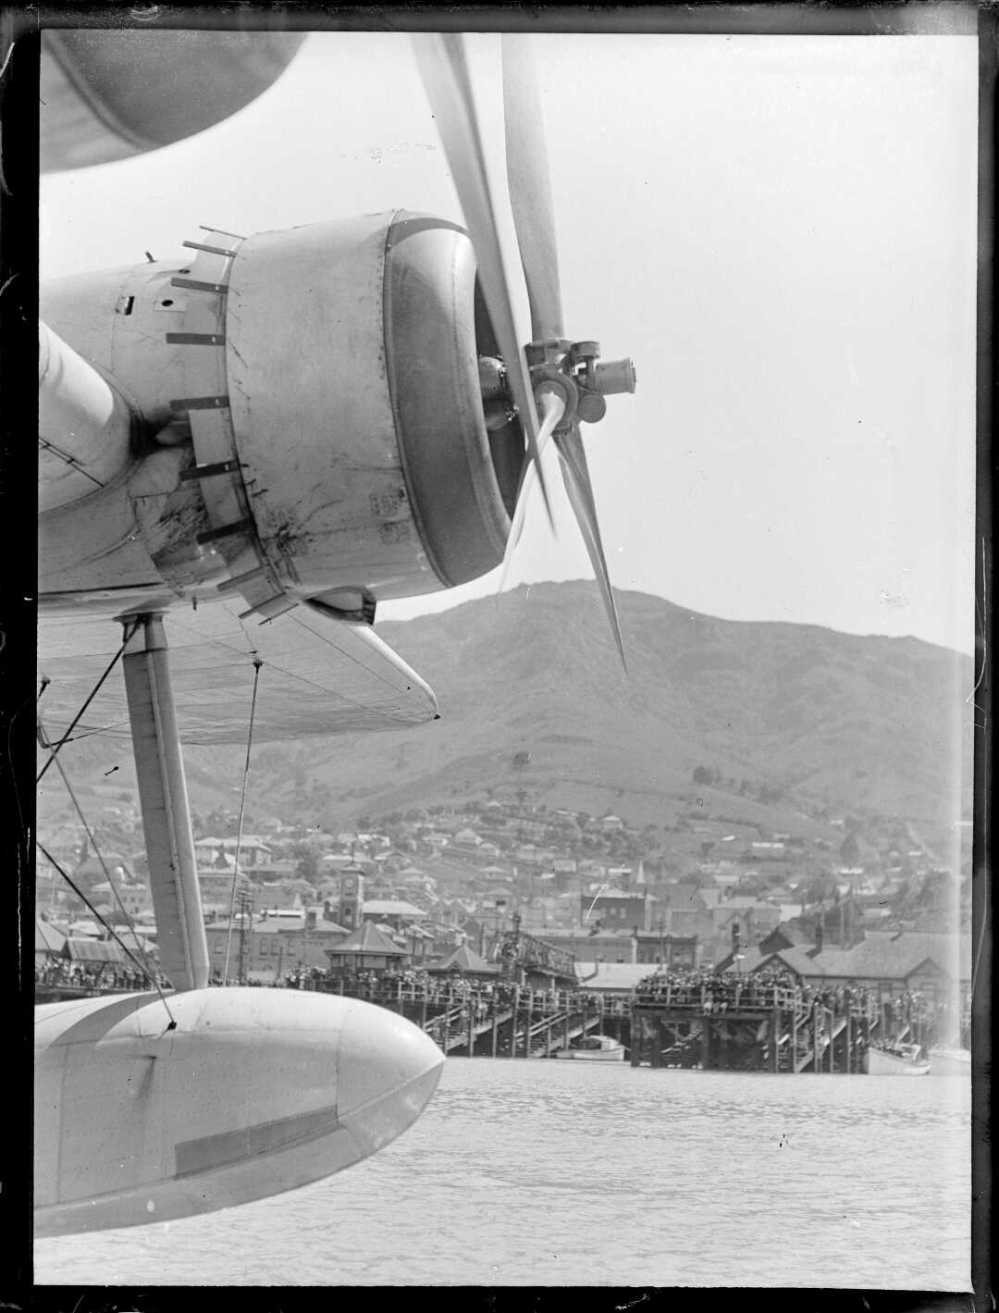 Seaplane Centaurus, Imperial Airways Ltd, moored Lyttelton harbour, Christchurch.